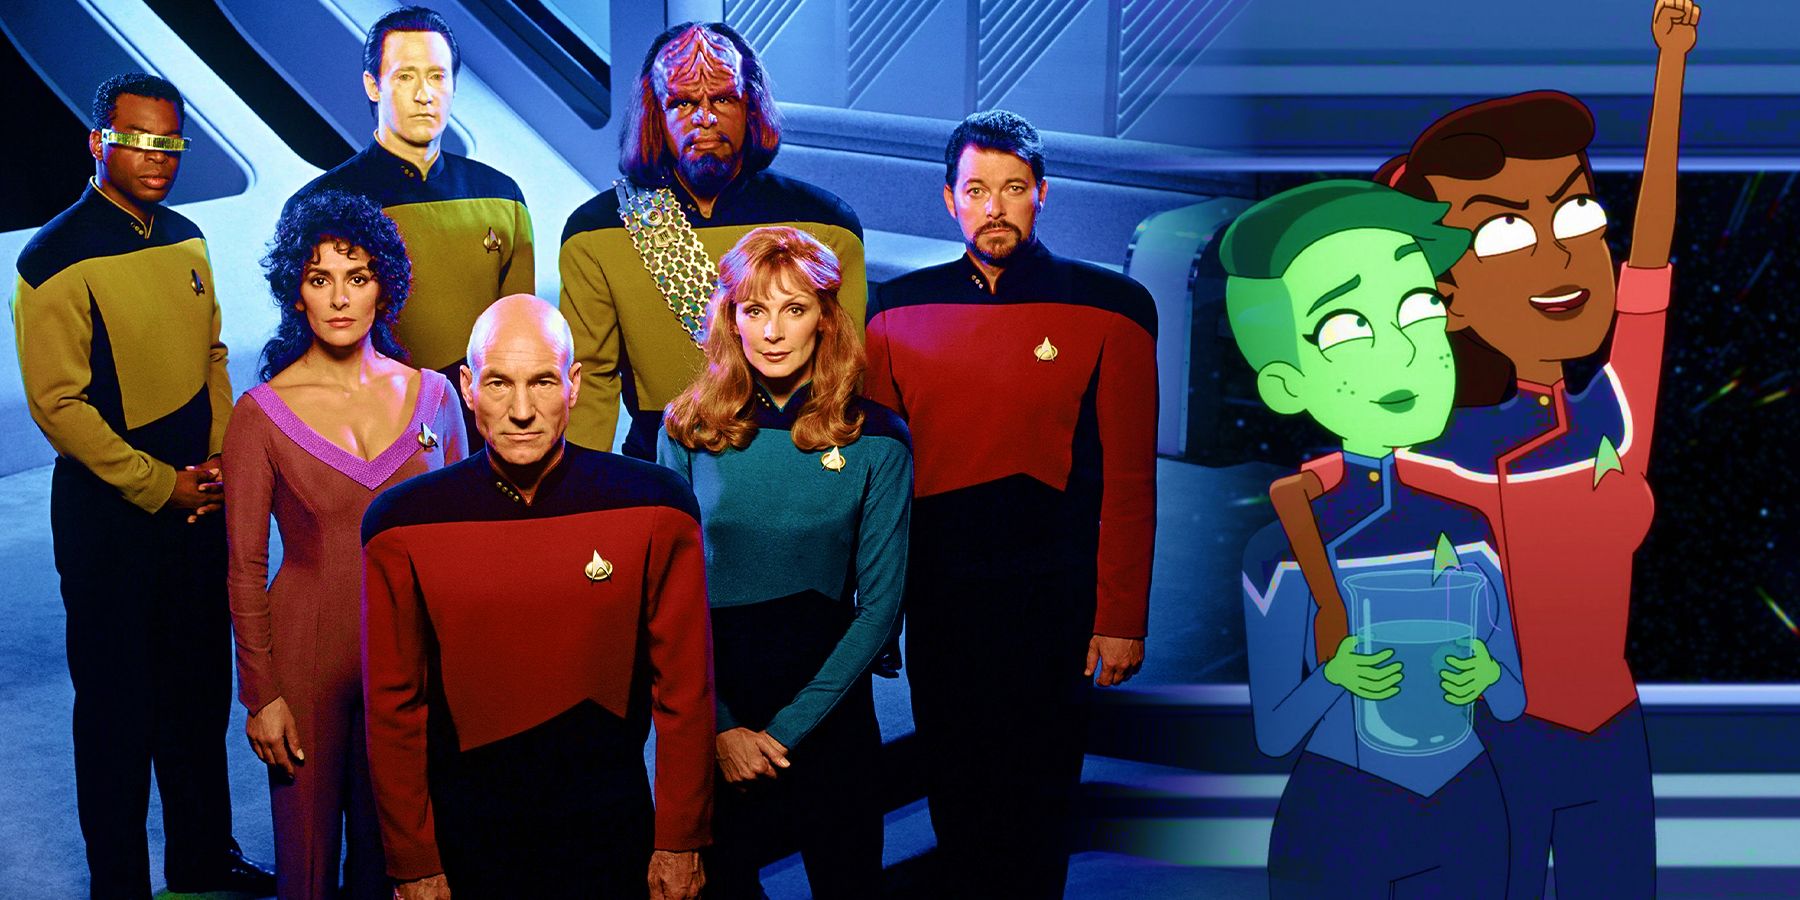 Crew members from Star Trek: The Next Generation and Star Trek: Lower Decks